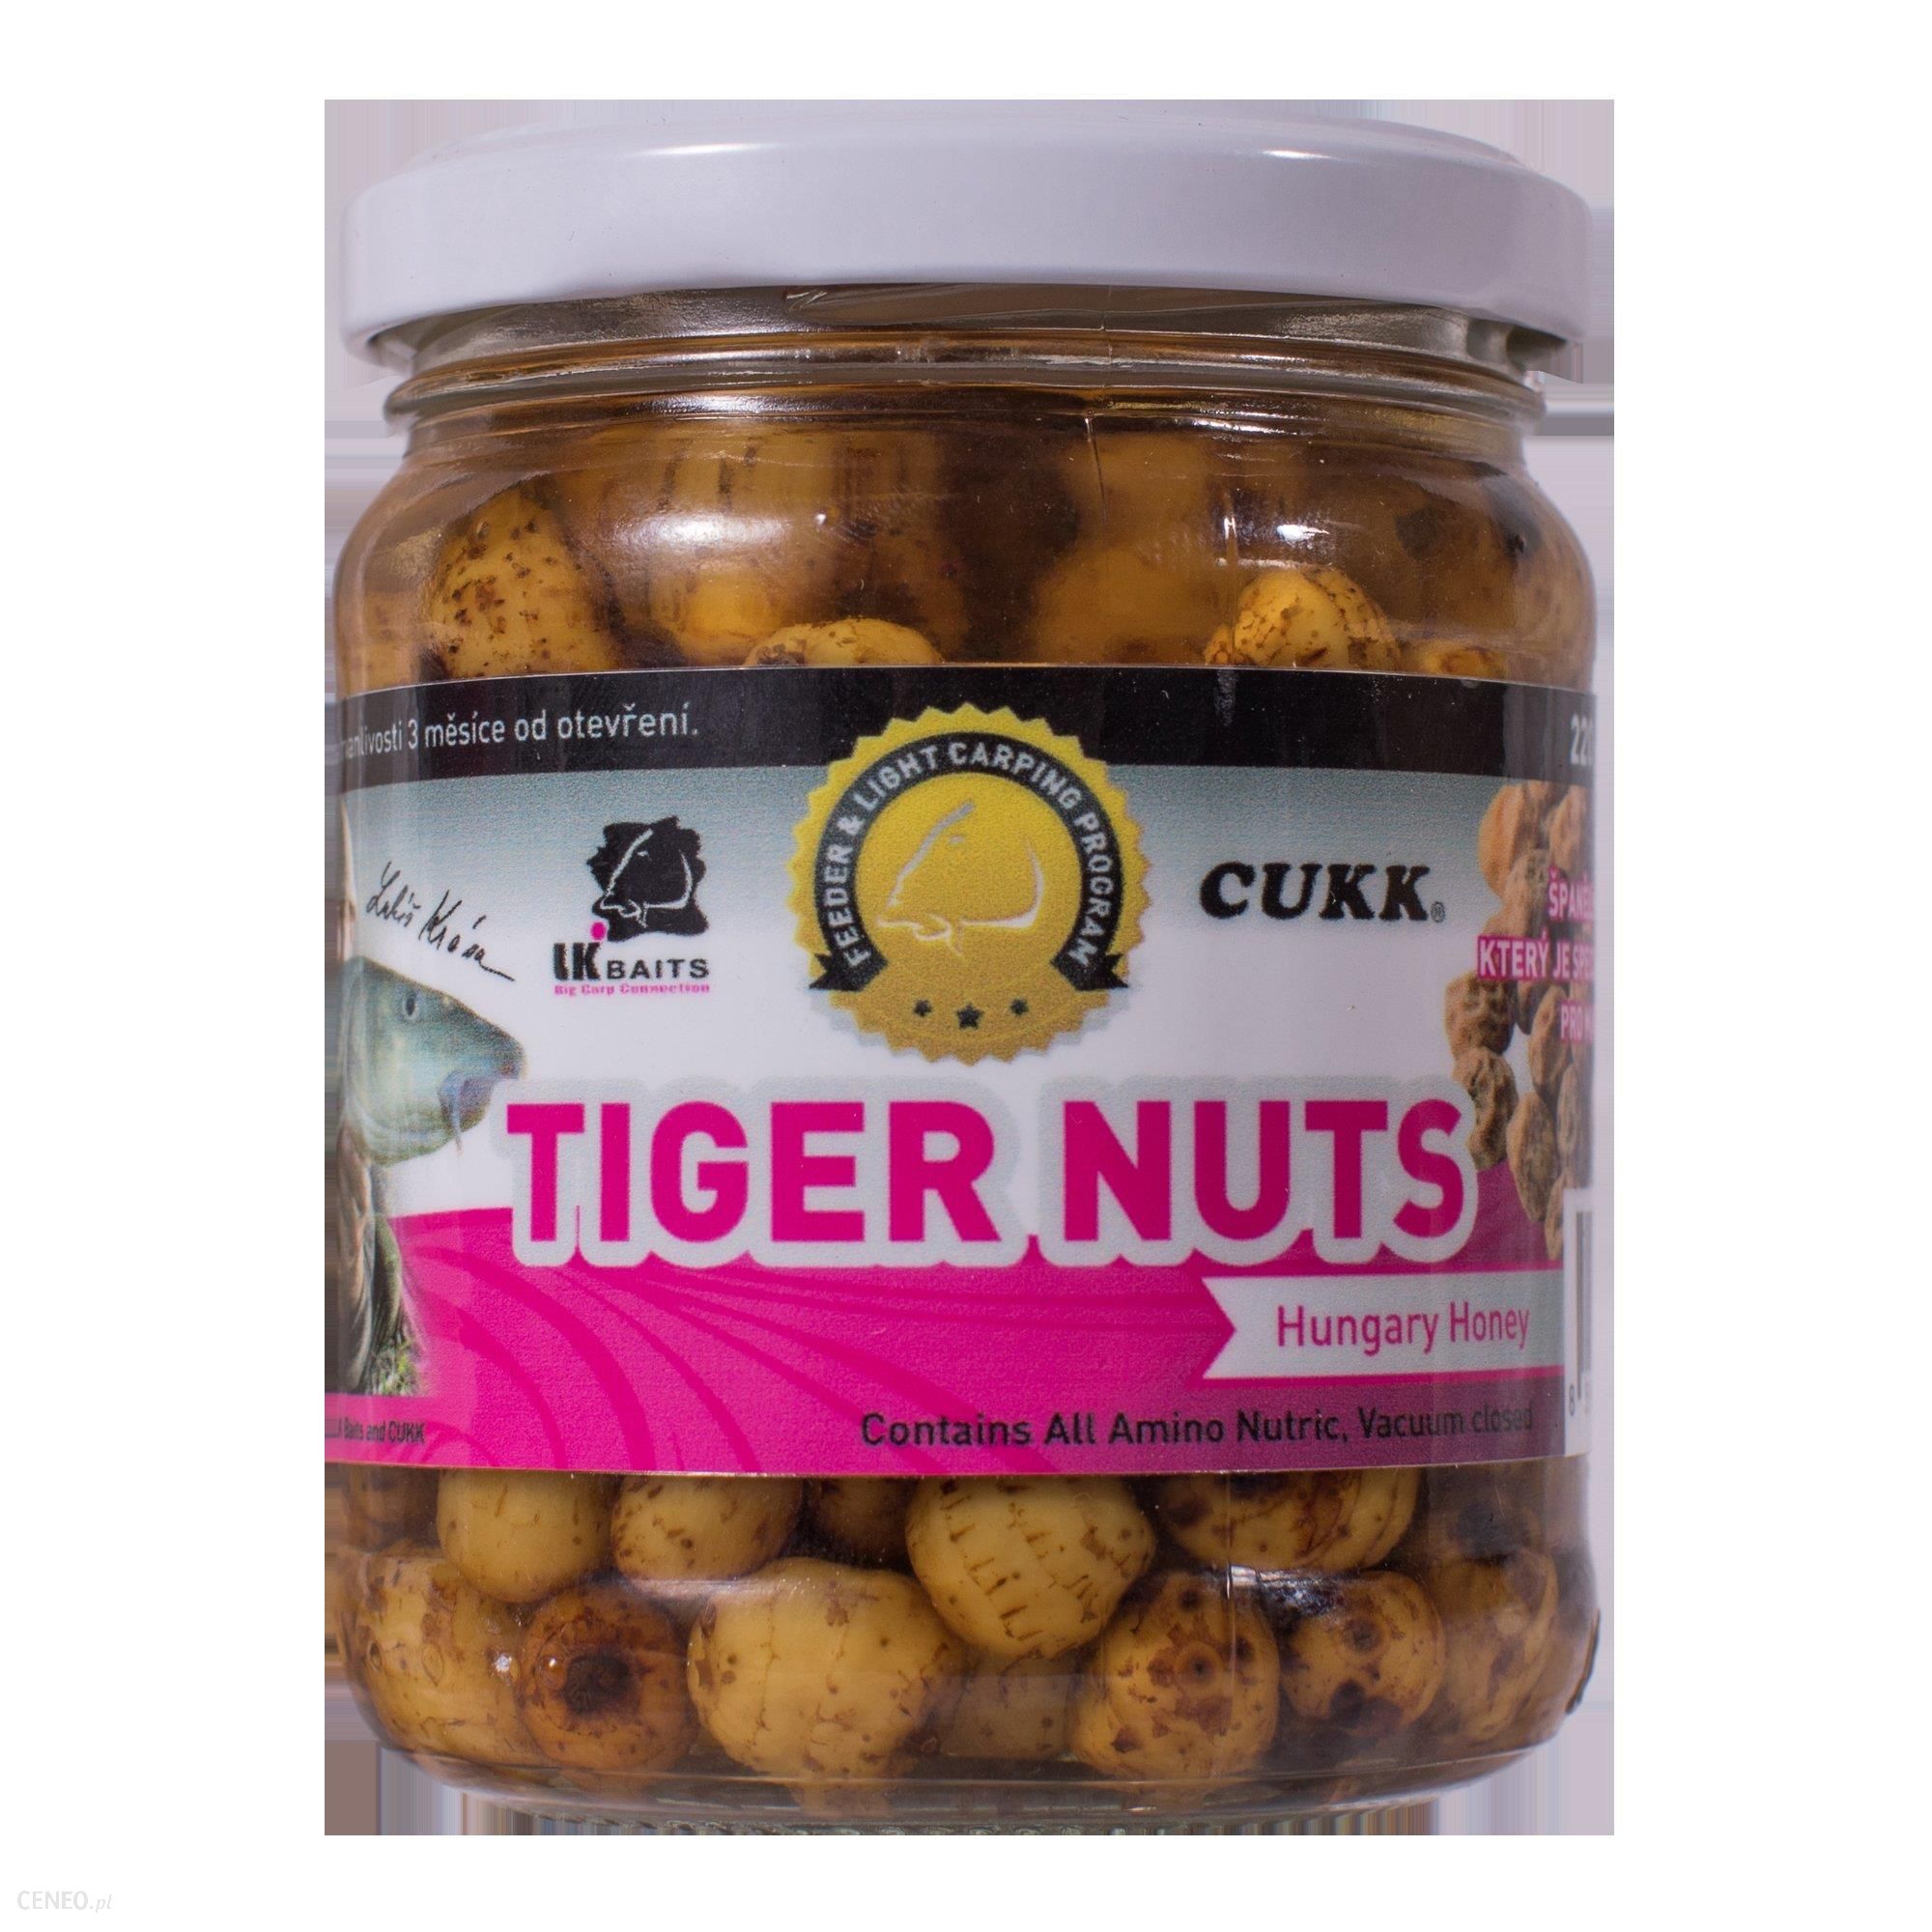 Lk Baits Tiger Nuts Hungary Honey Cukk